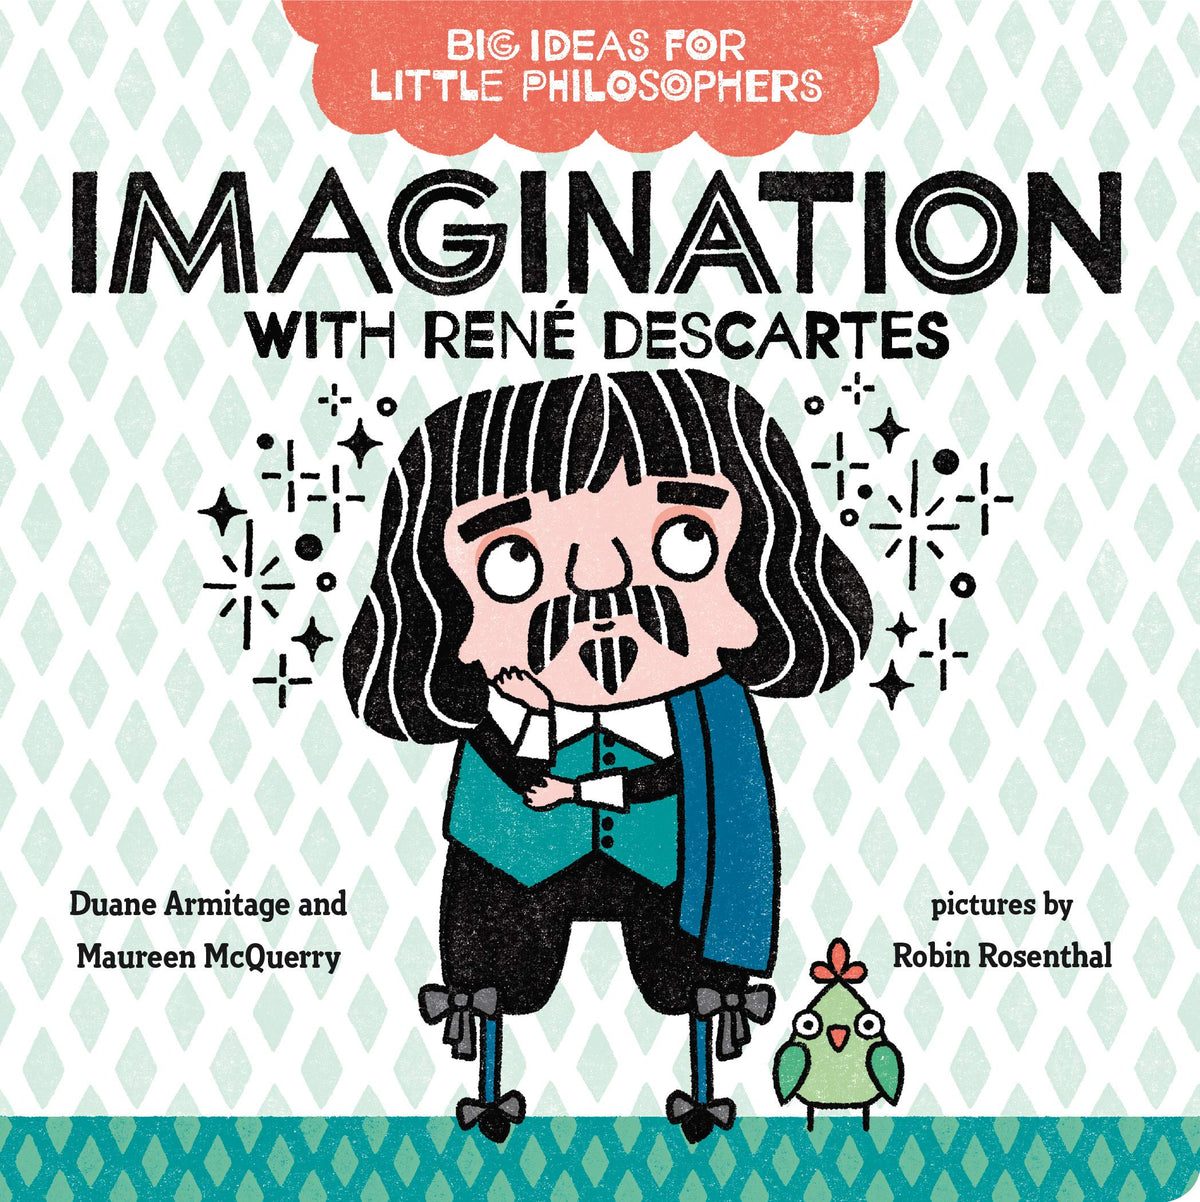 Big Ideas for Little Philosophers: Imagination with Rene Descartes